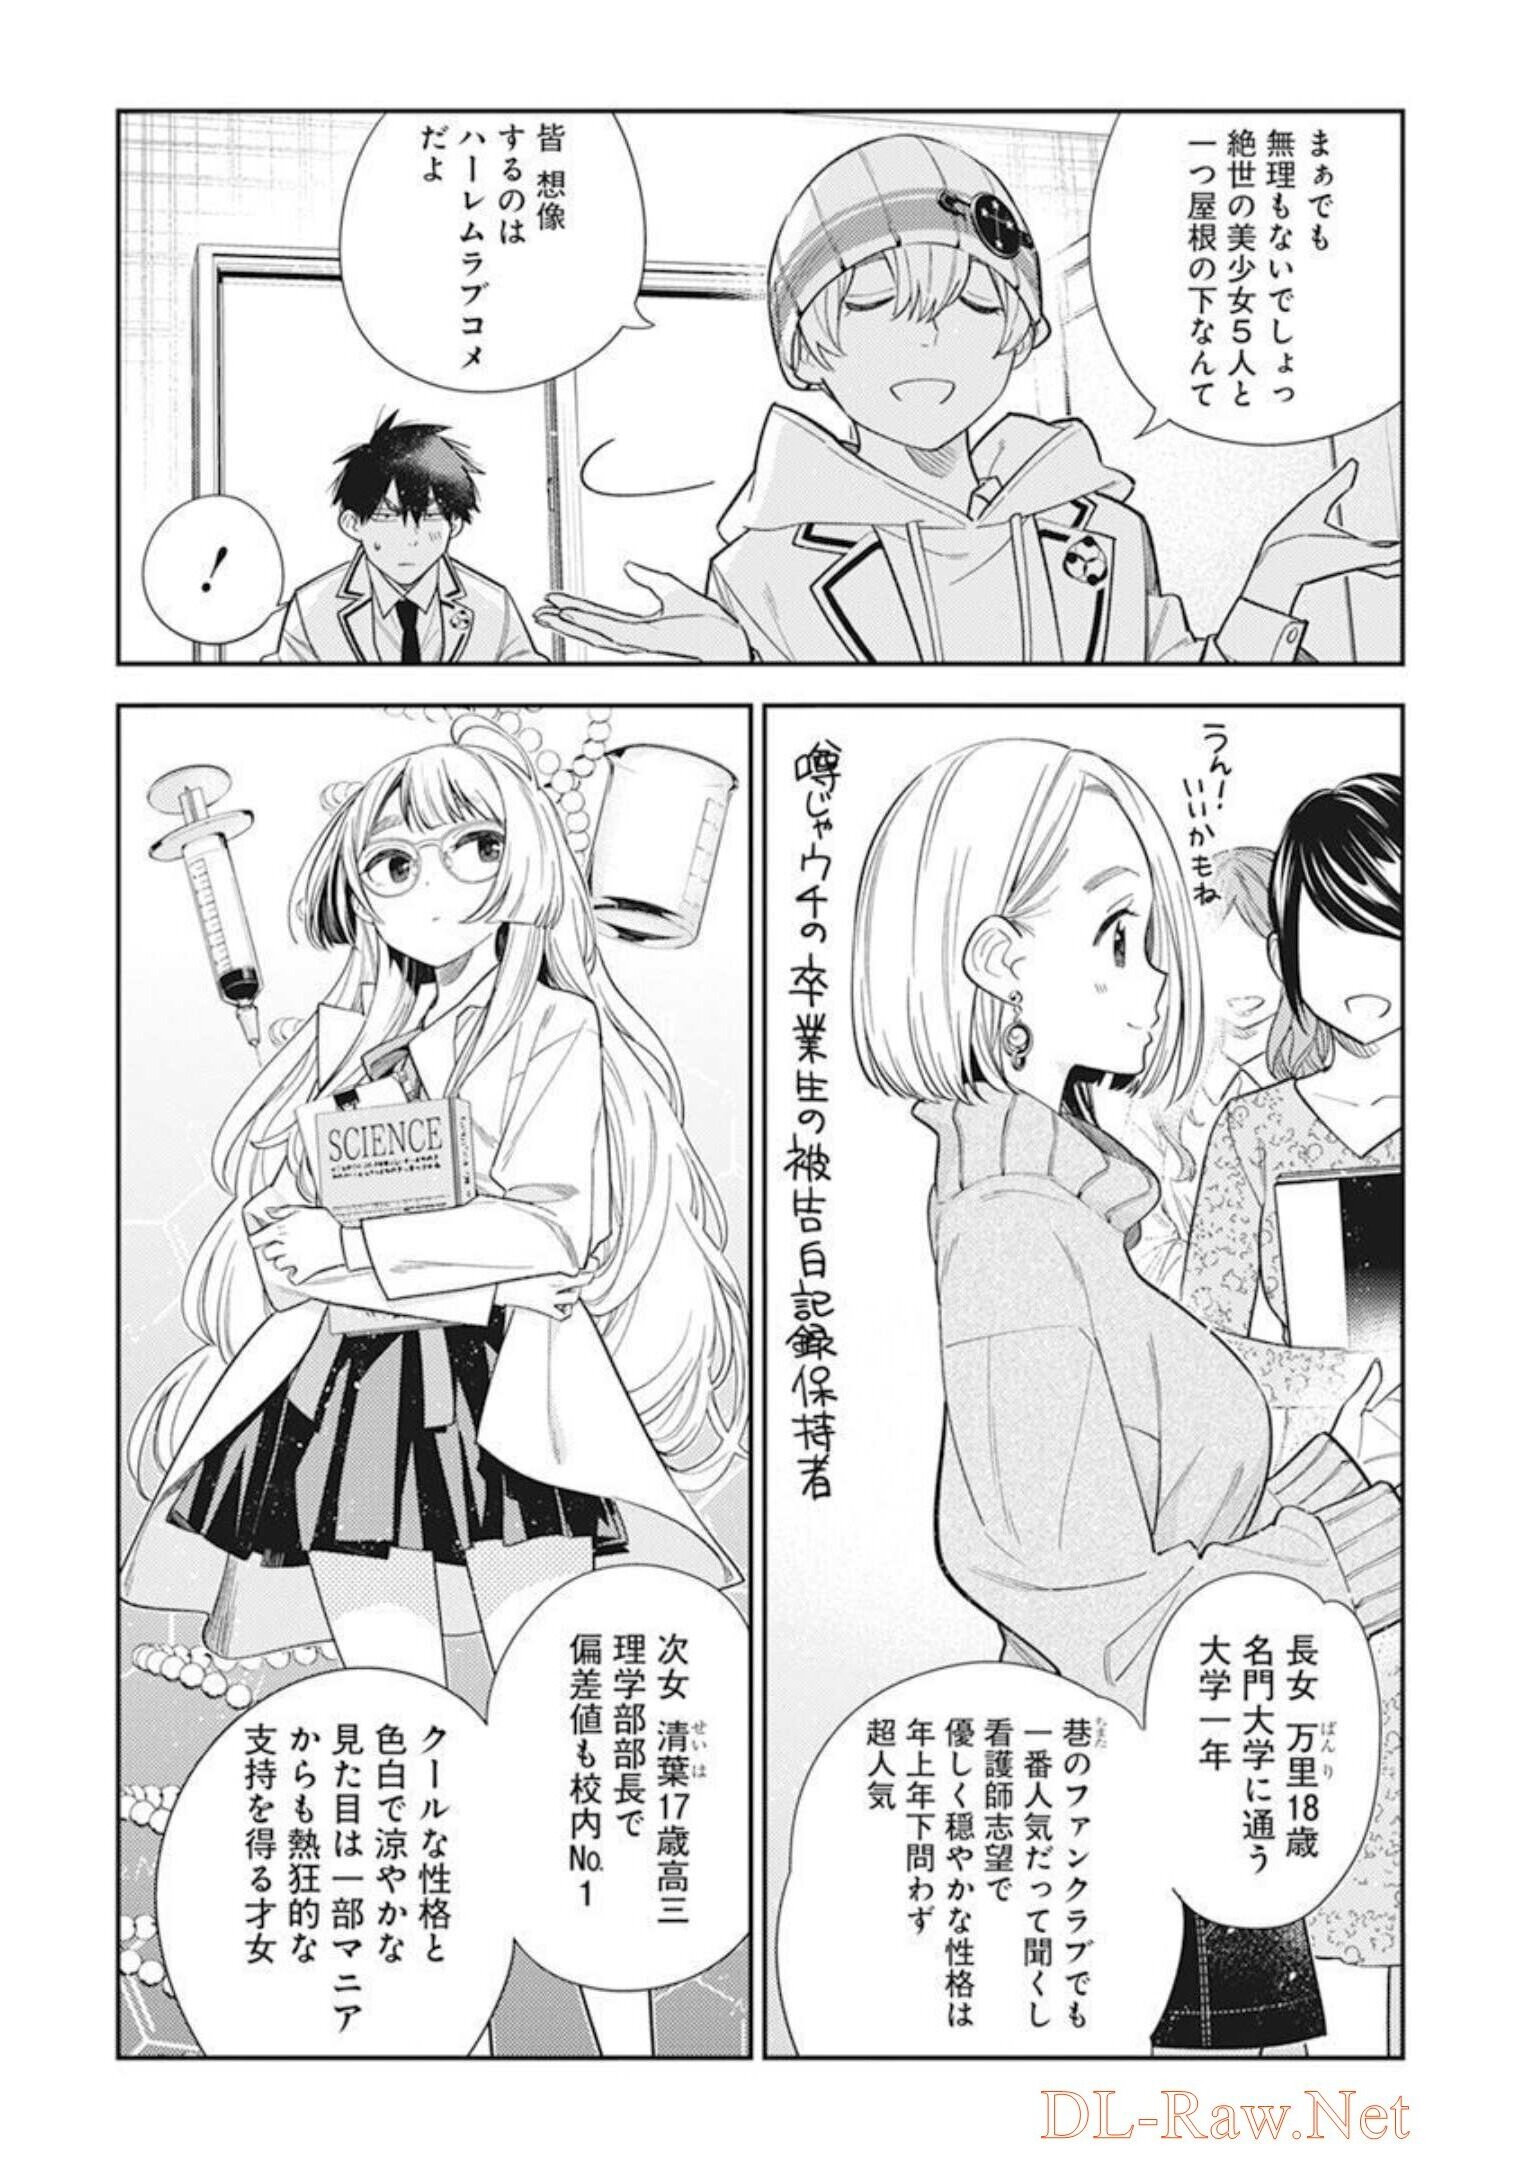 Shiunji-ke no Kodomotachi (Children of the Shiunji Family) - Chapter 01 - Page 21